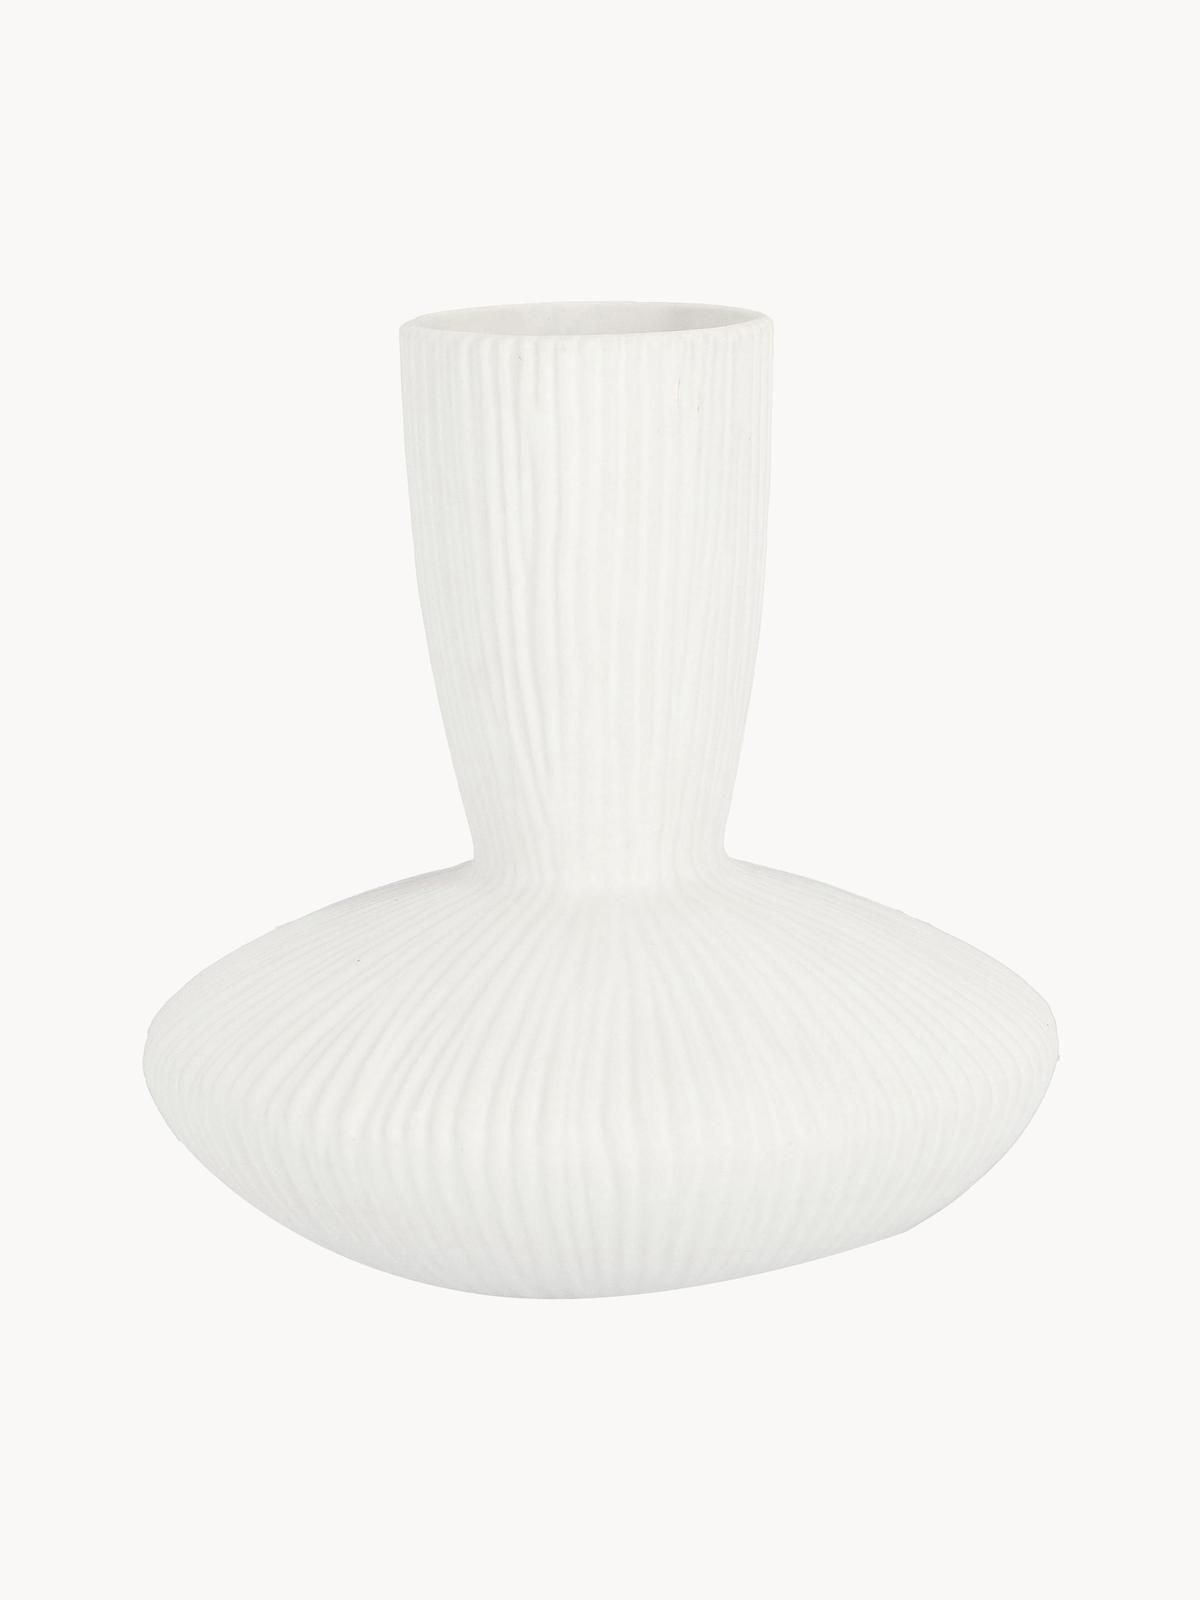 Keramik Design-Vase Striped, H 23 cm von Bizzotto